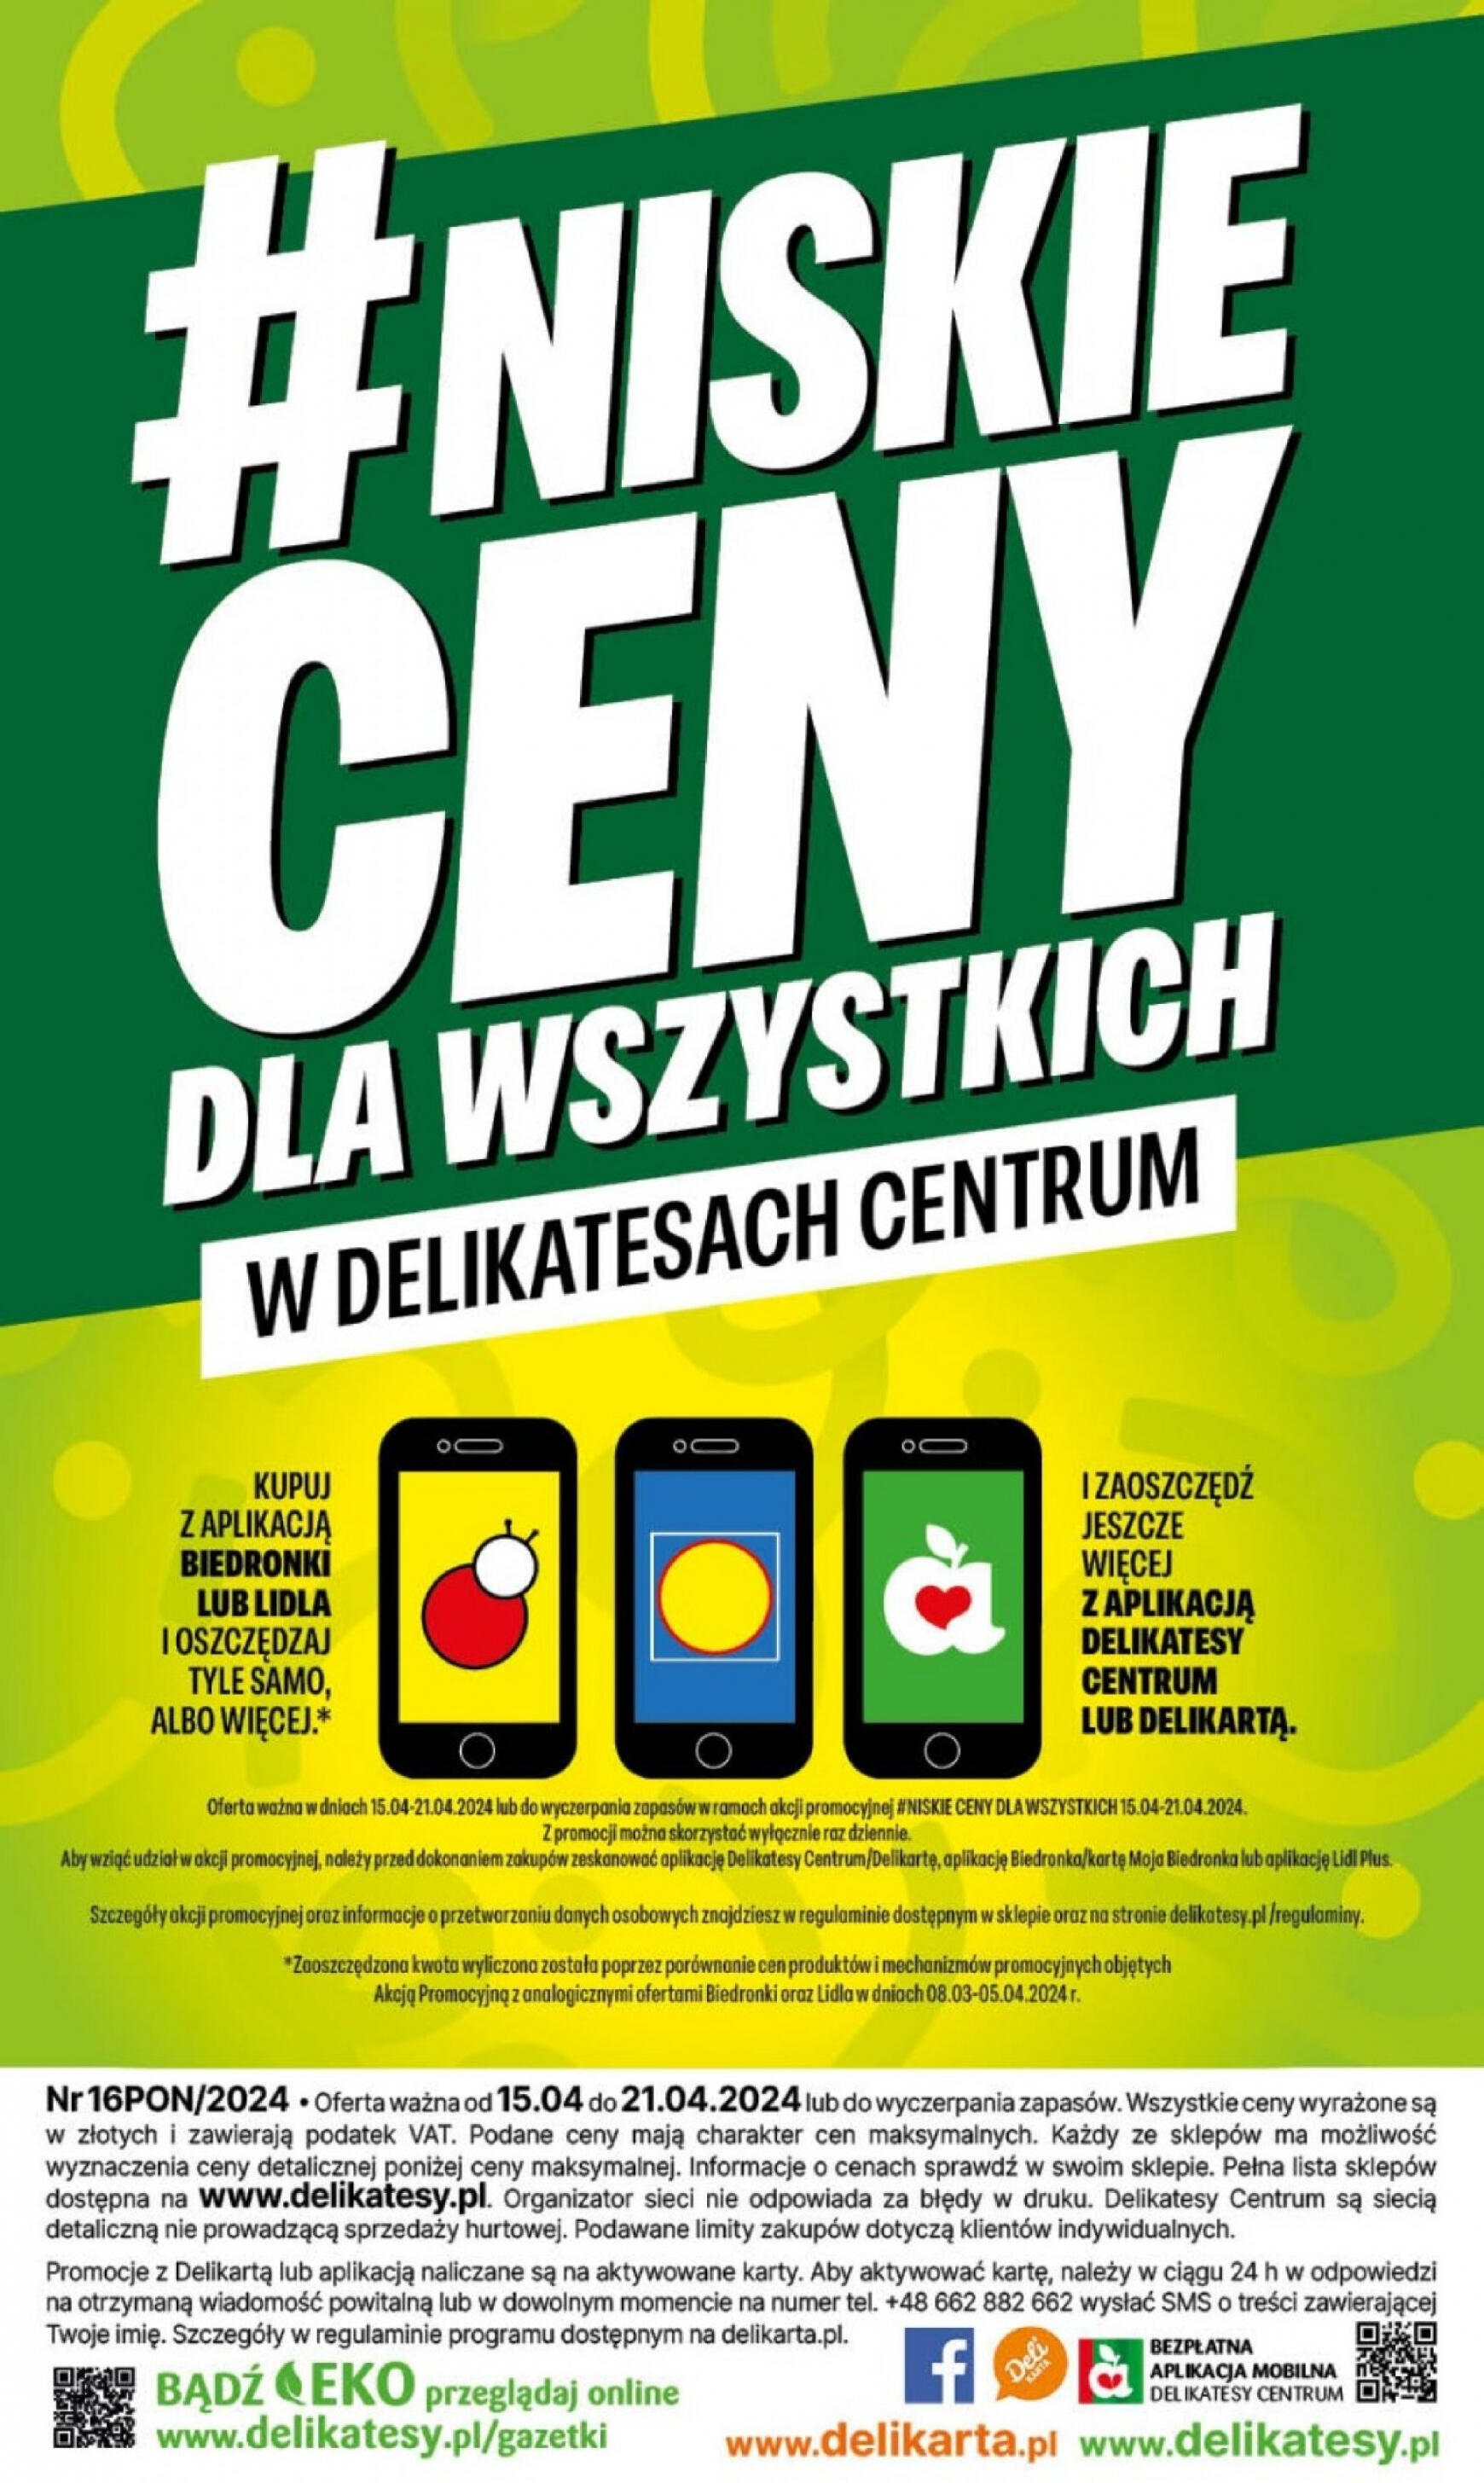 delikatesy-centrum - Delikatesy Centrum gazetka aktualna ważna od 15.04. - 21.04. - page: 41